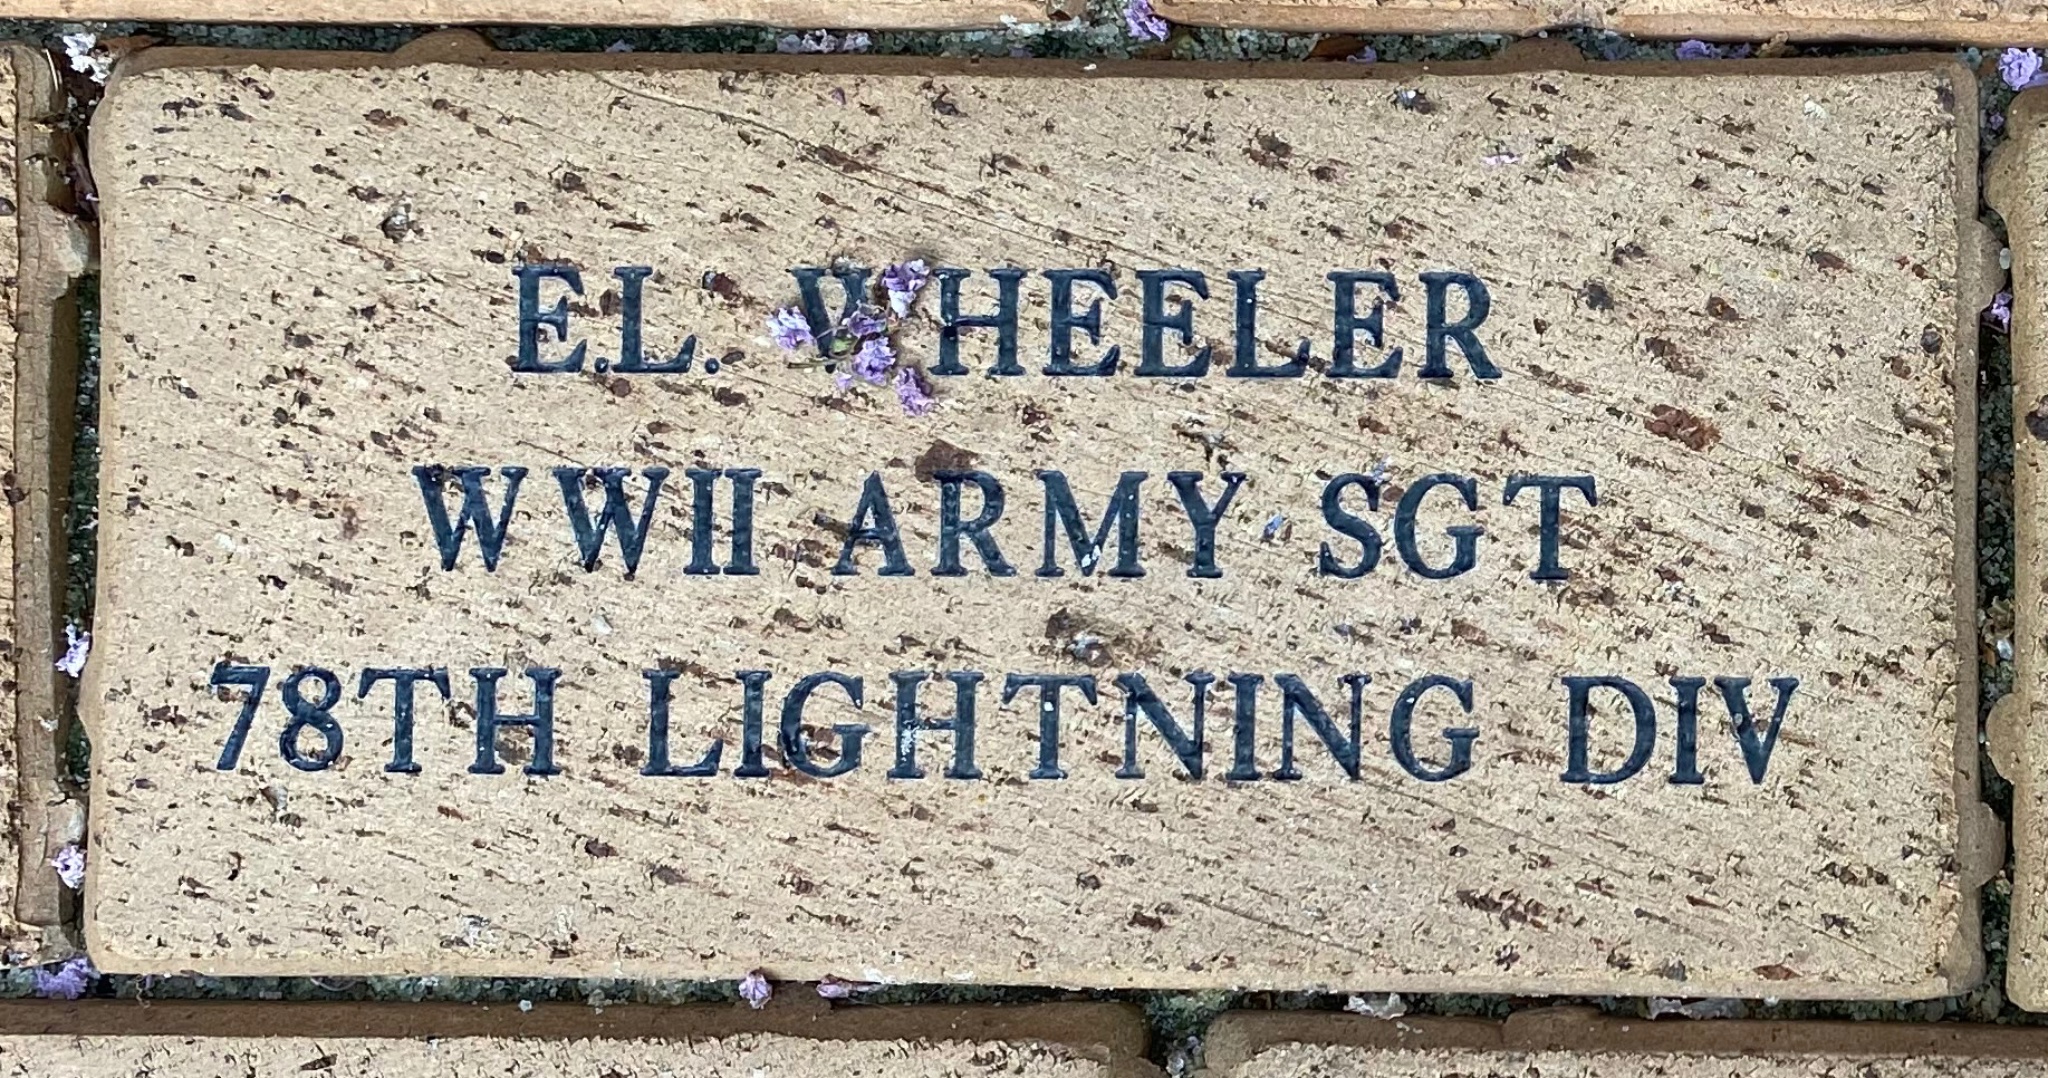 E.L. WHEELER WWII ARMY SGT 78TH LIGHTNING DV